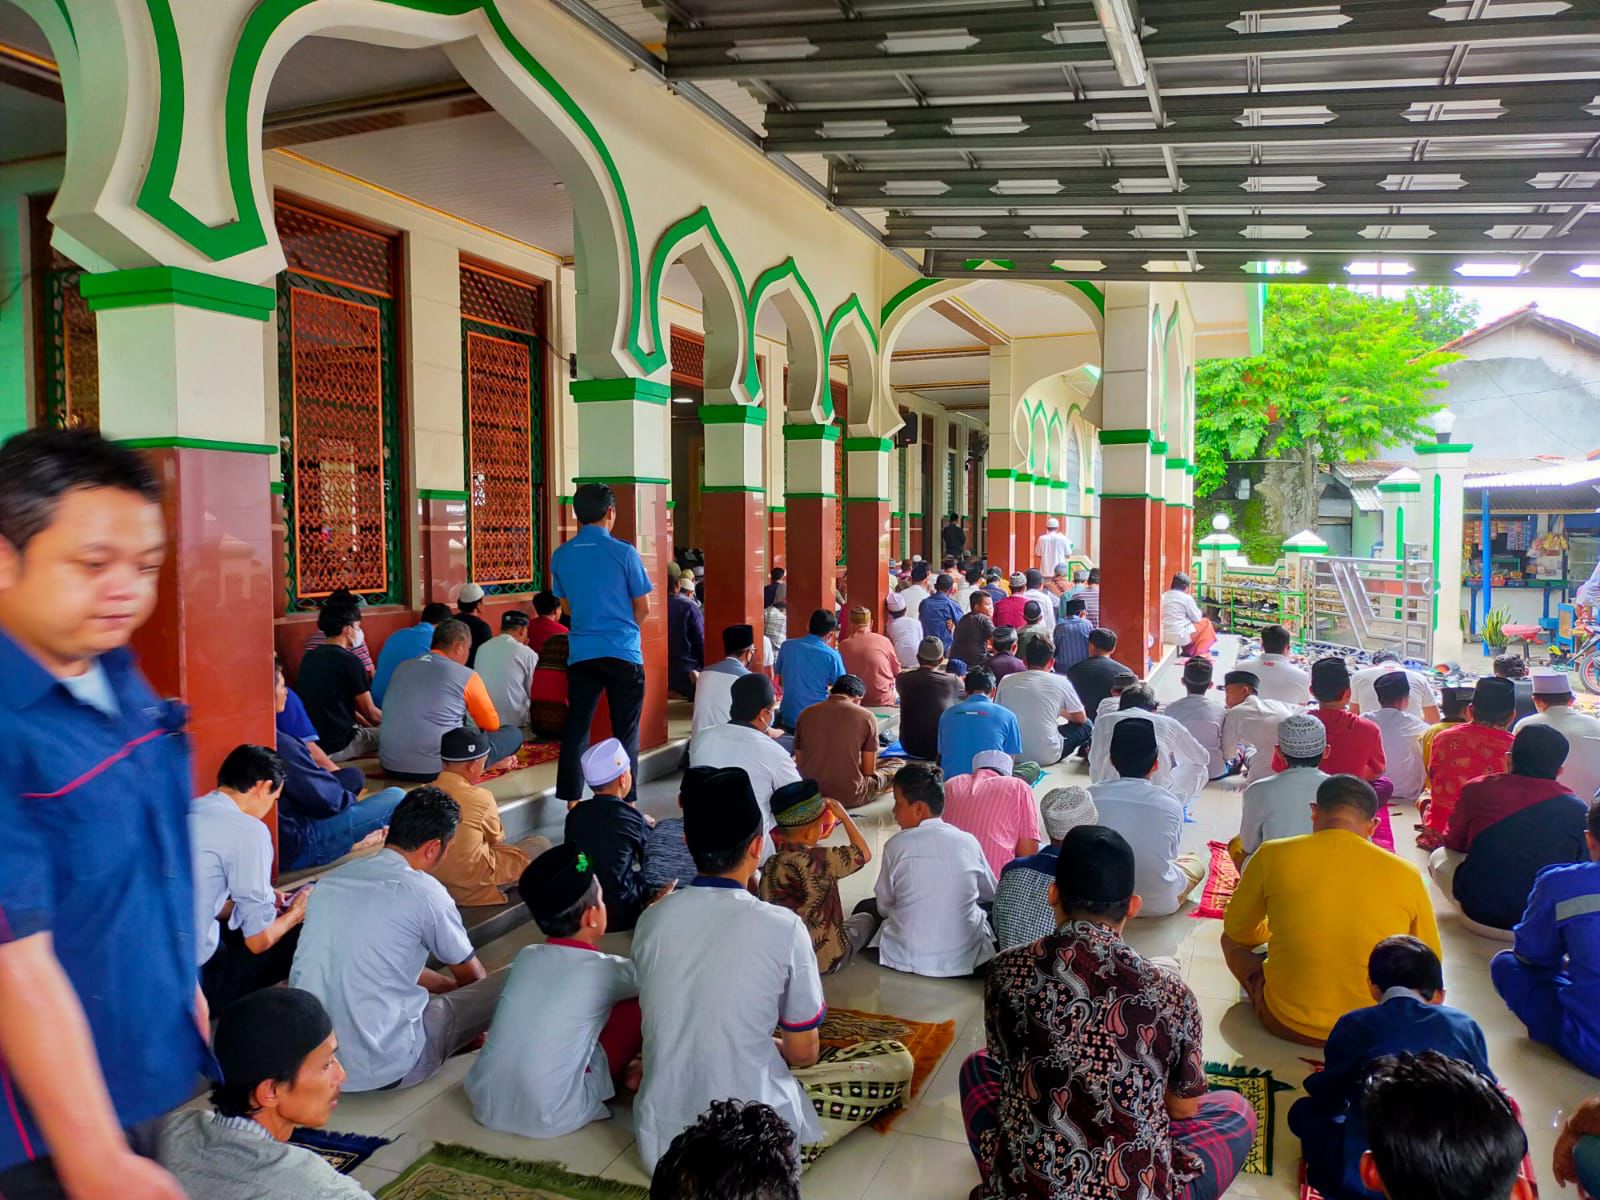 	Suasana jamaah Masjid Jami Nurul Iman, Jatake, Kota Tangerang, Banten saat menjalani salat Jum'at.